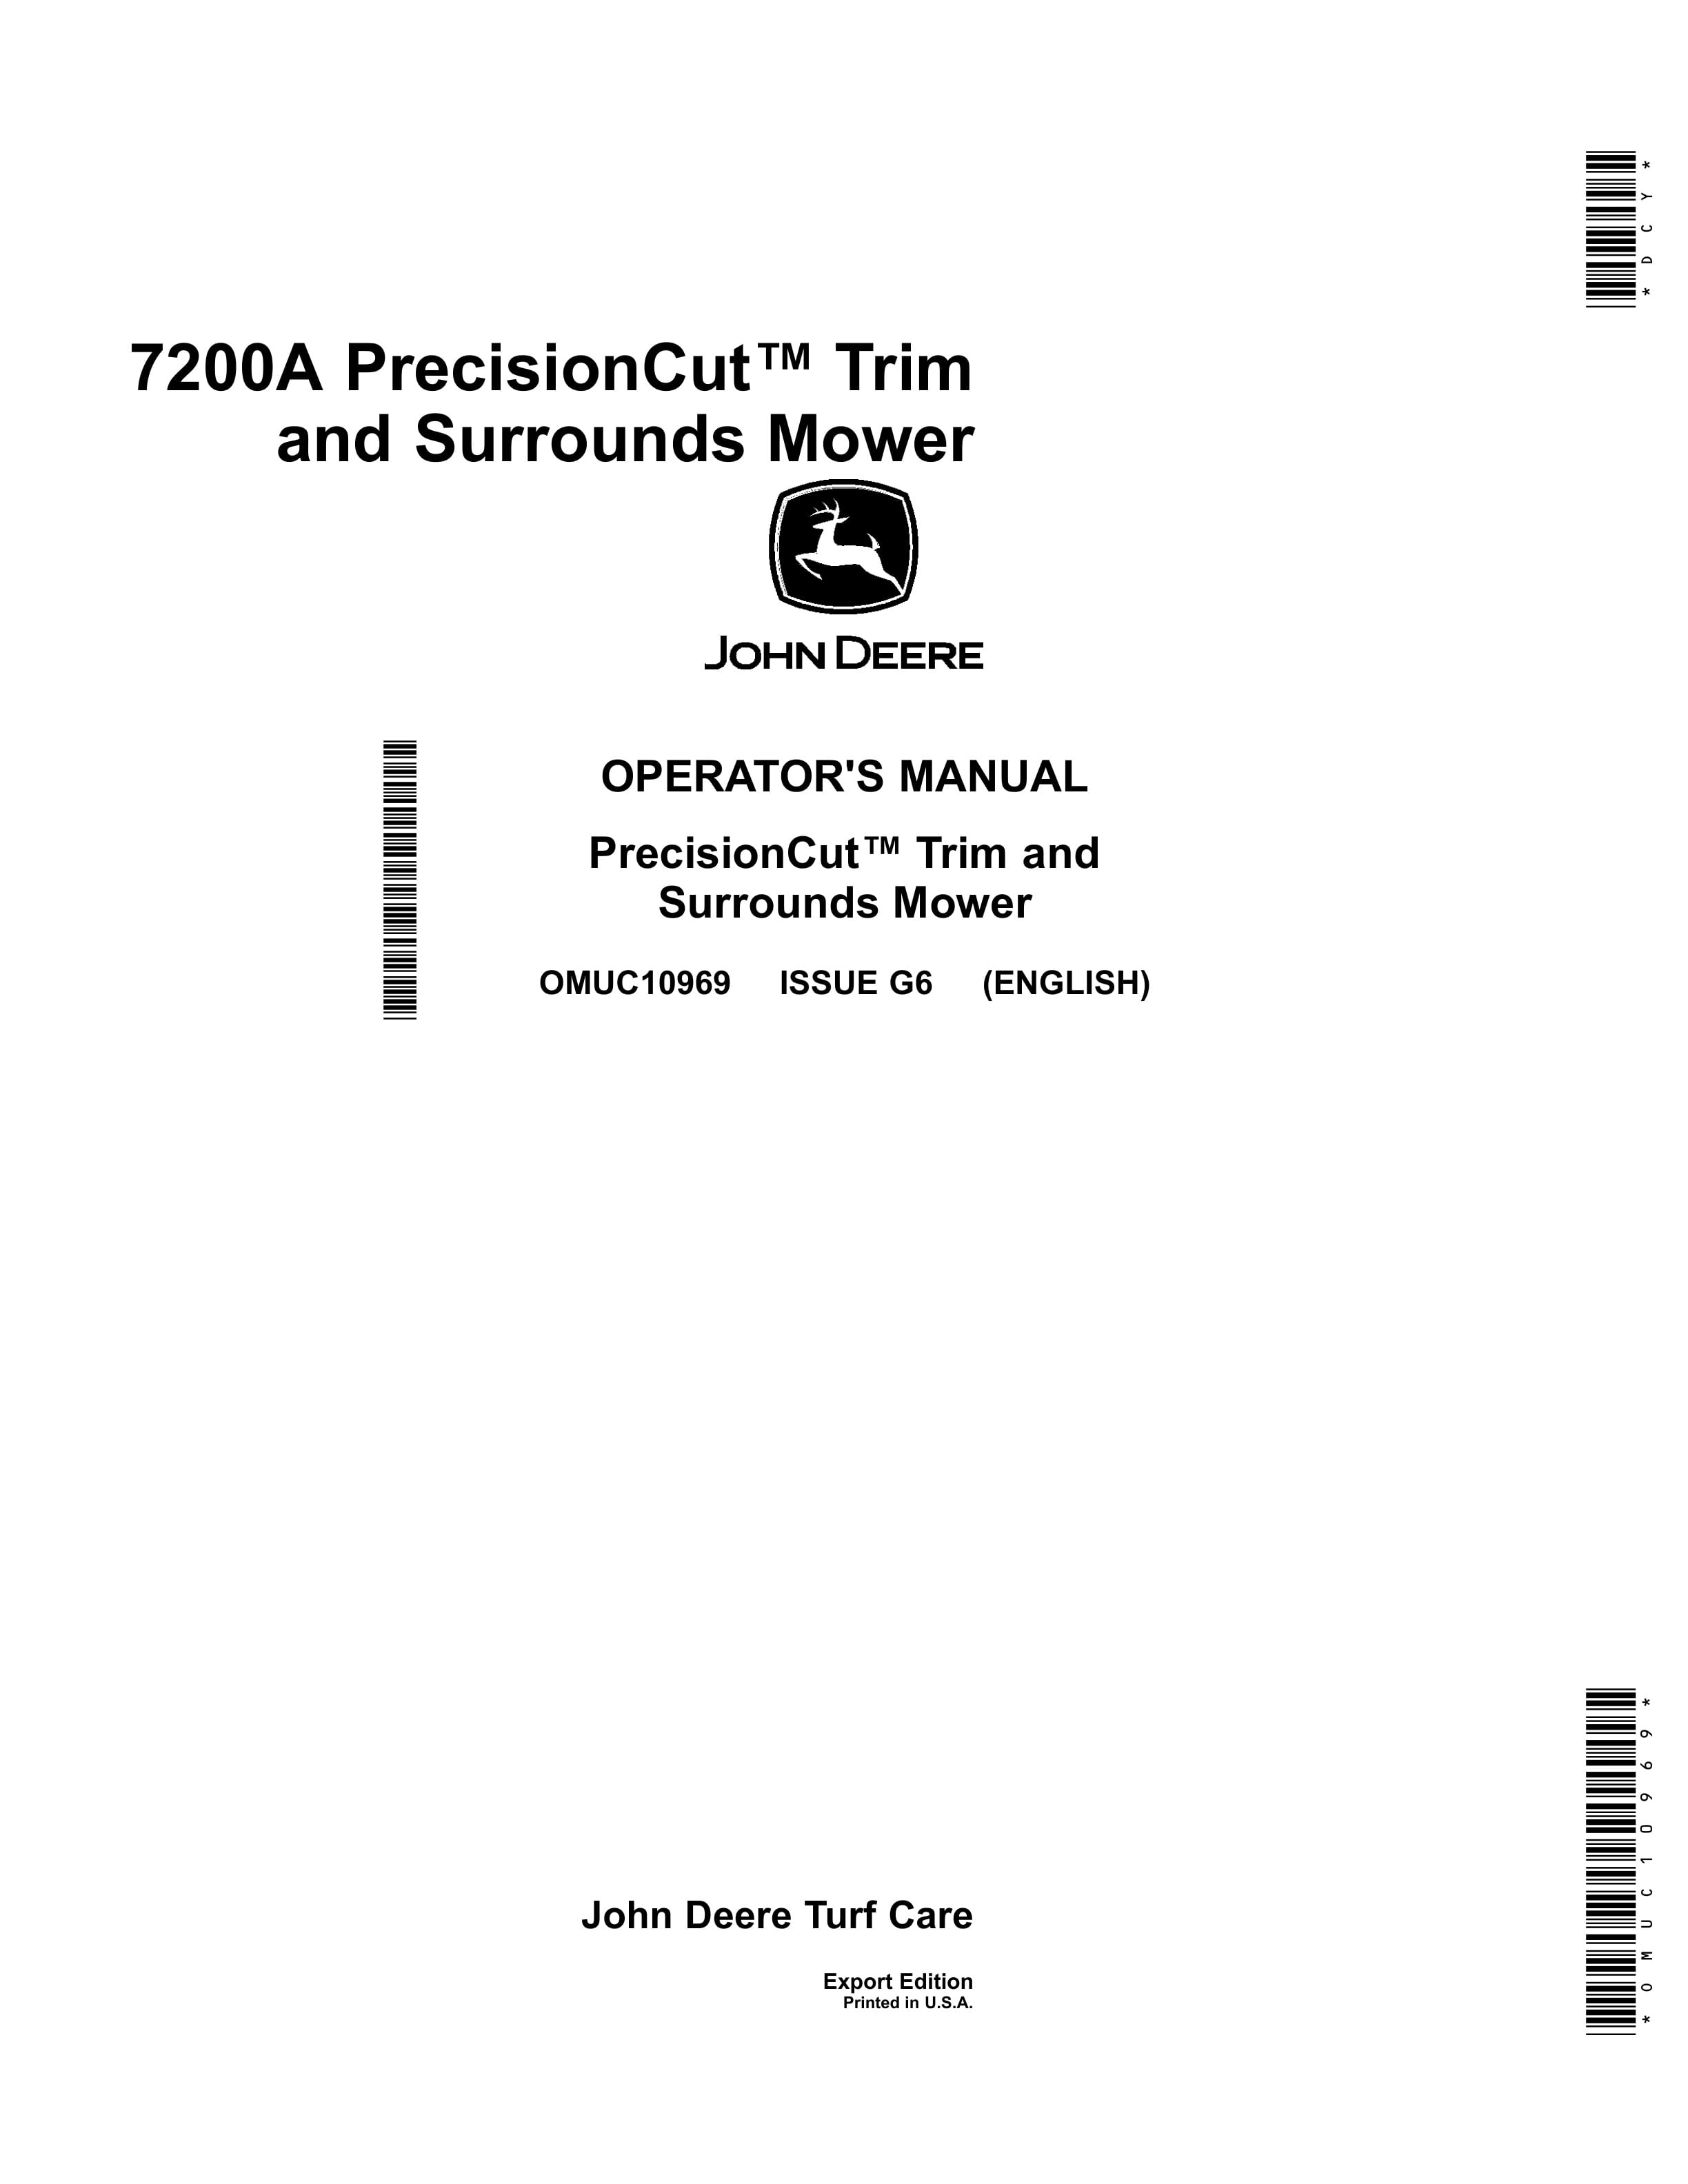 John Deere 7200A PrecisionCut Trim and Surrounds Mower Operator Manual OMUC10969 1